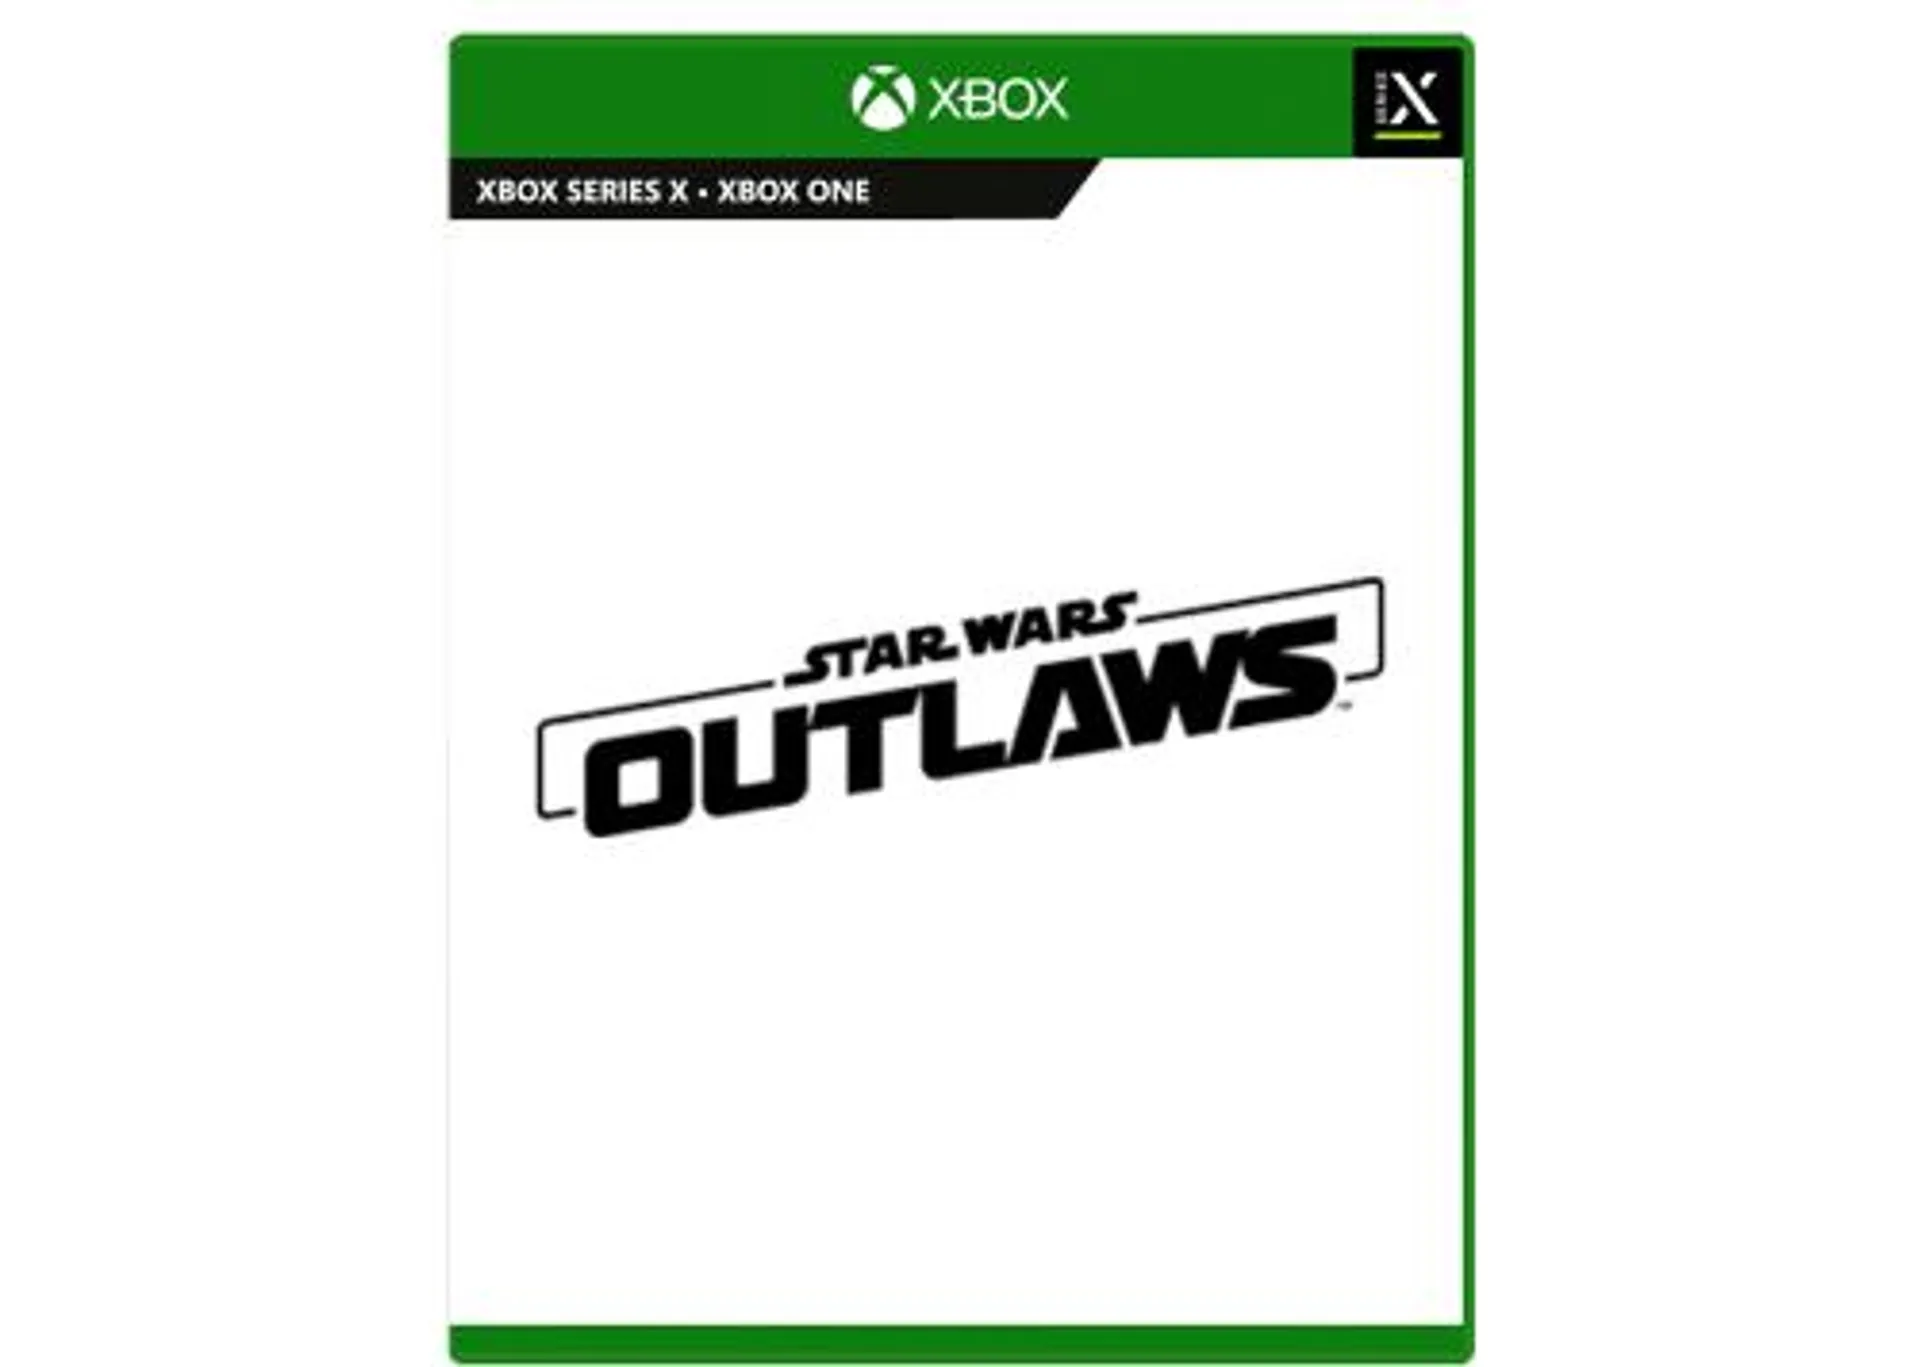 Star Wars Outlaws (Xbox Series X)